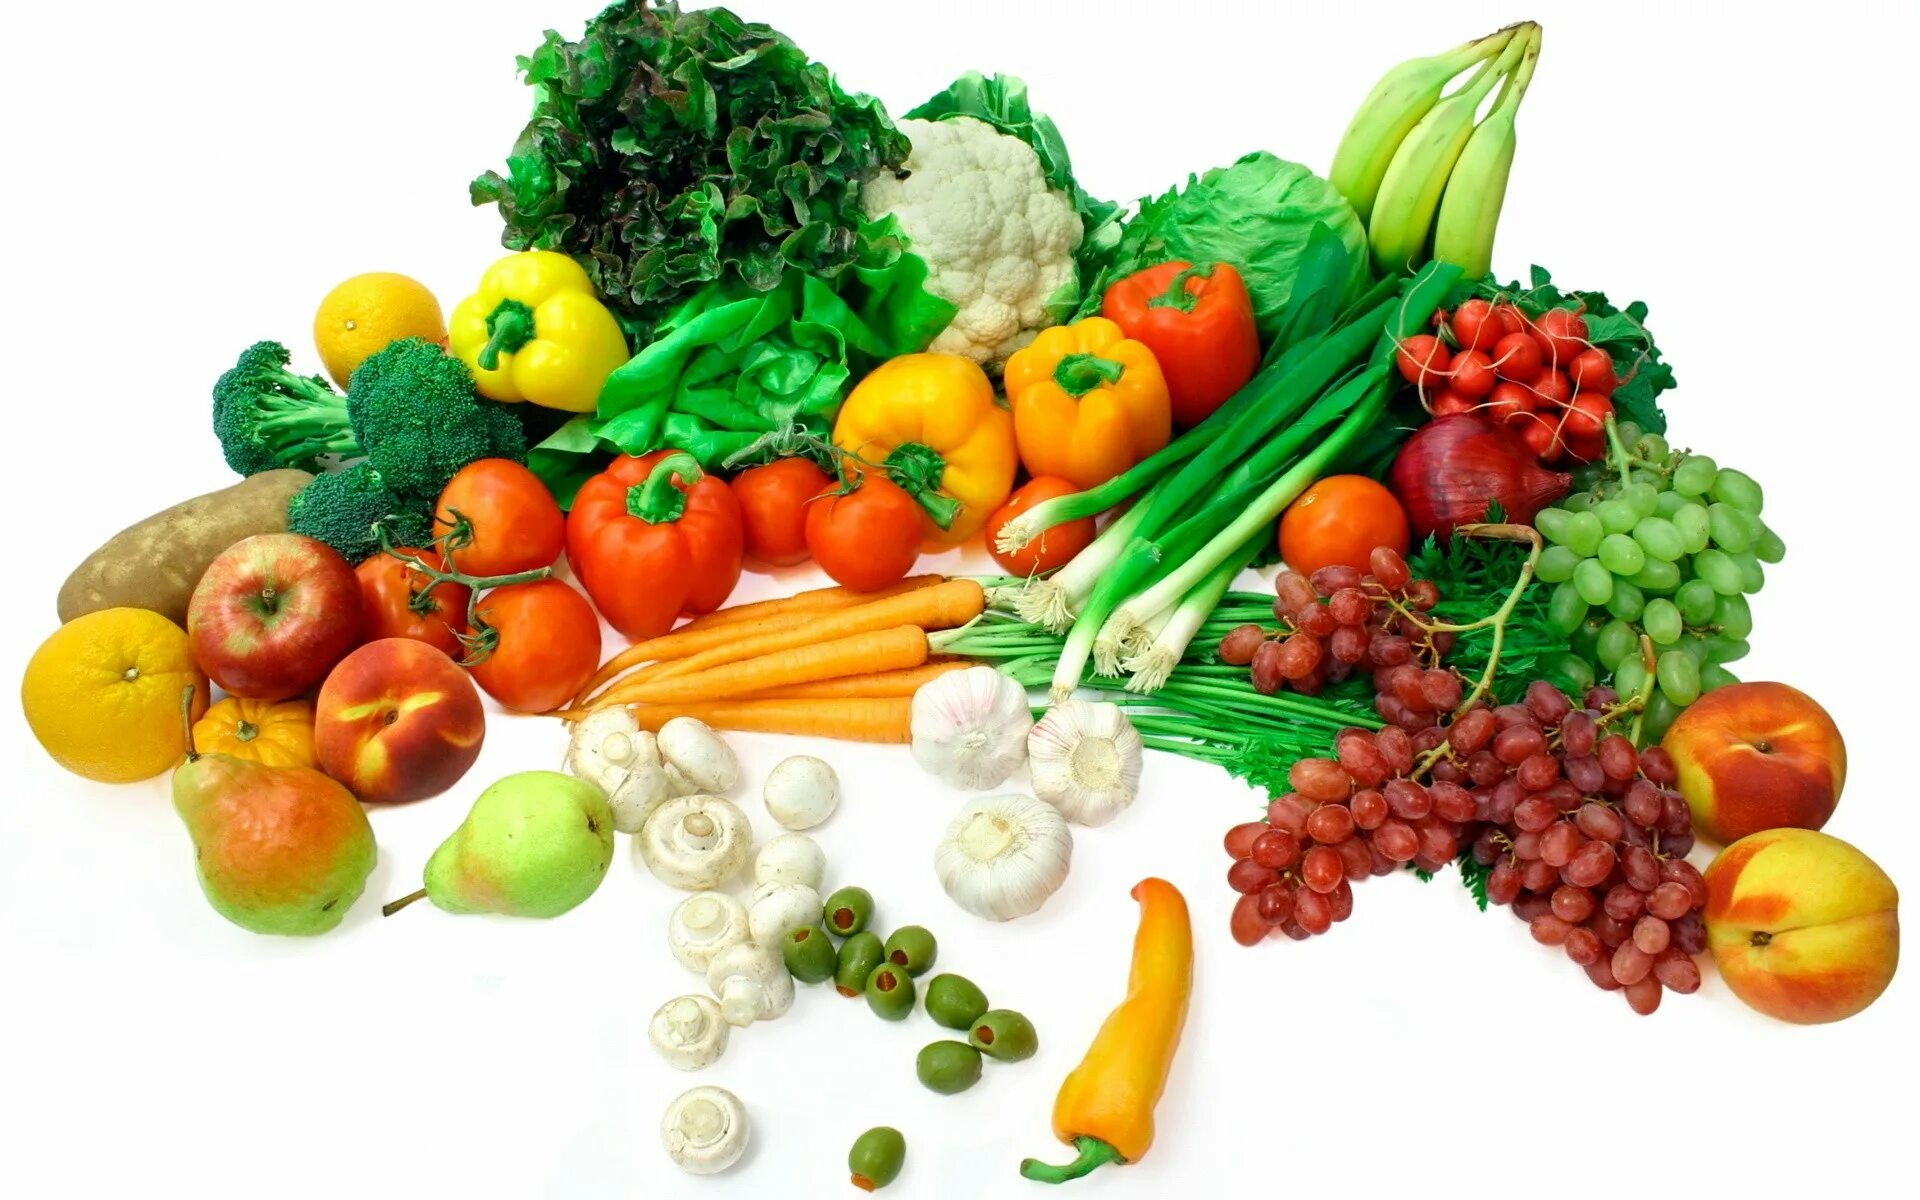 Two vegetables. Овощи и фрукты. Овощи и фрукты на белом фоне. Овощи и фрукты на прозрачном фоне. Овощи на белом фоне.